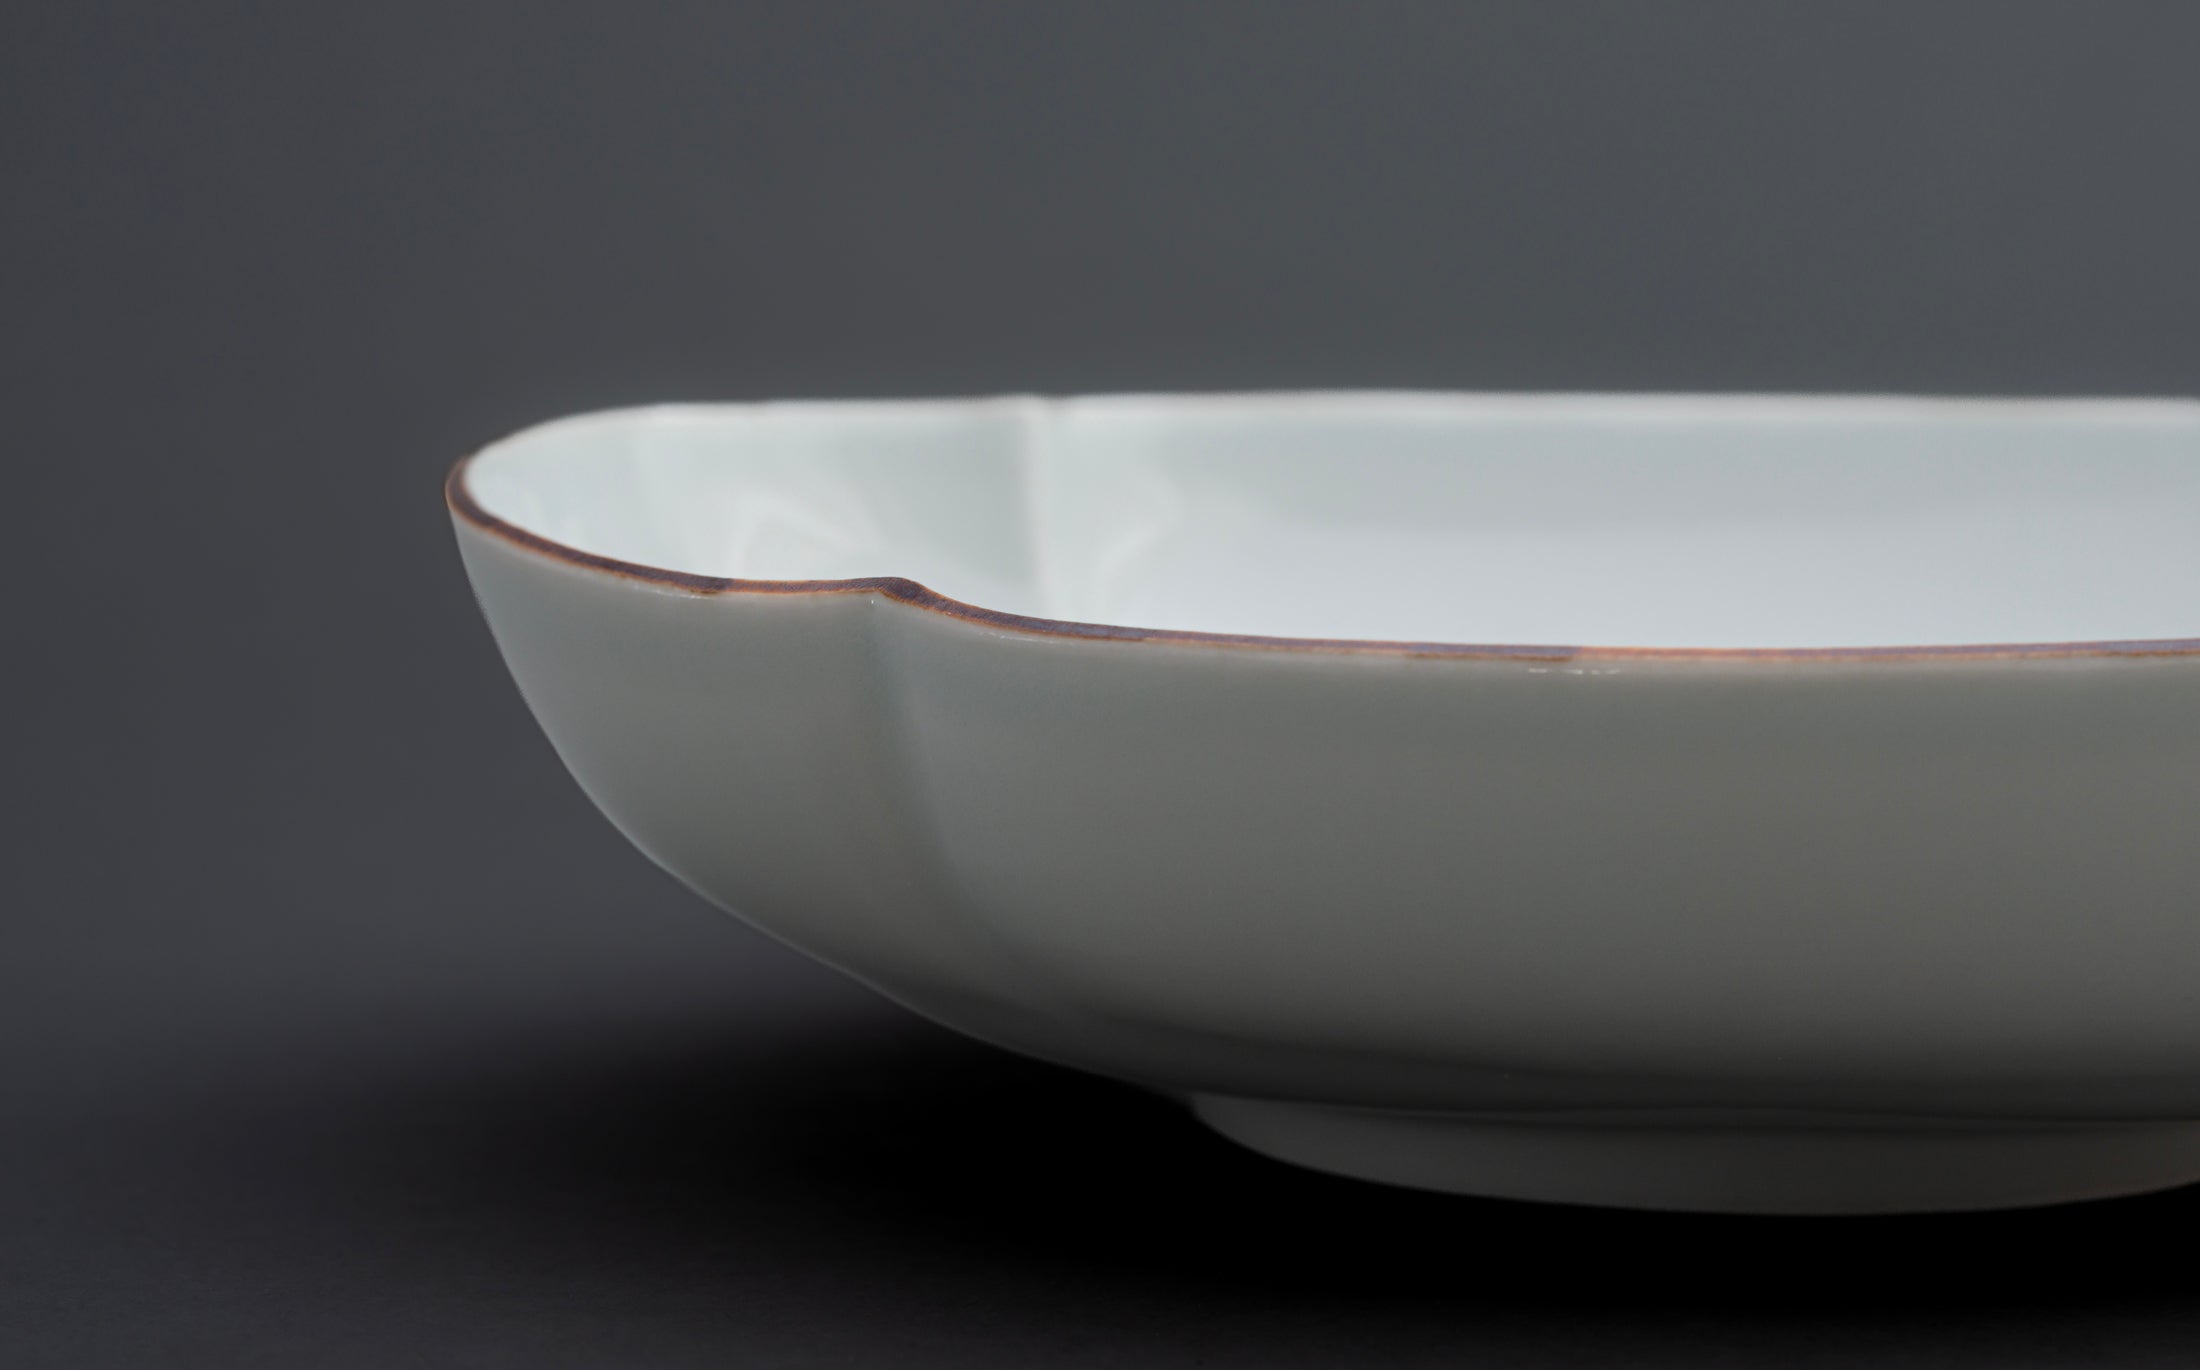 Katsutoshi Mizuno - Porcelain White - Plate 006